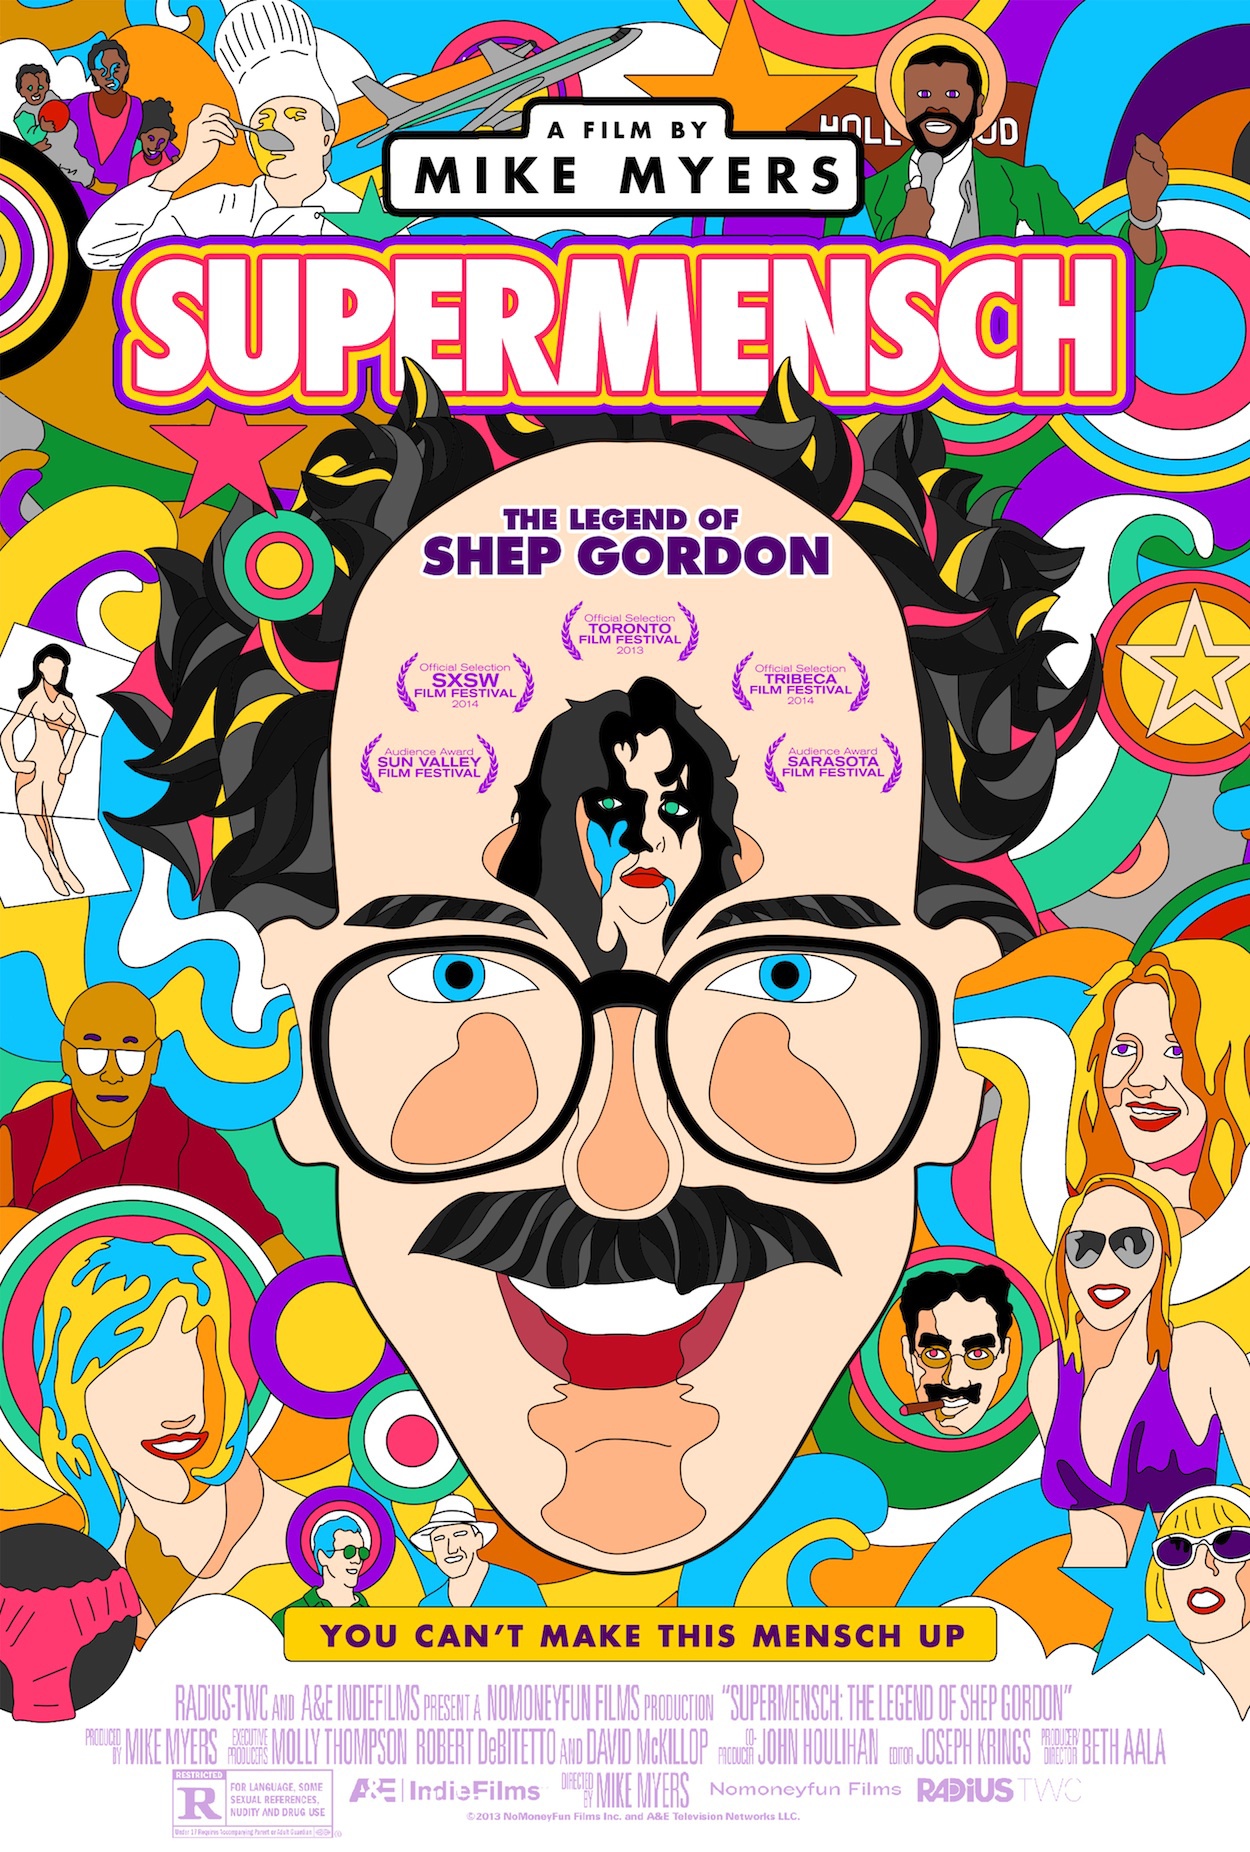 Nonton film Supermensch The Legend of Shep Gordon layarkaca21 indoxx1 ganool online streaming terbaru